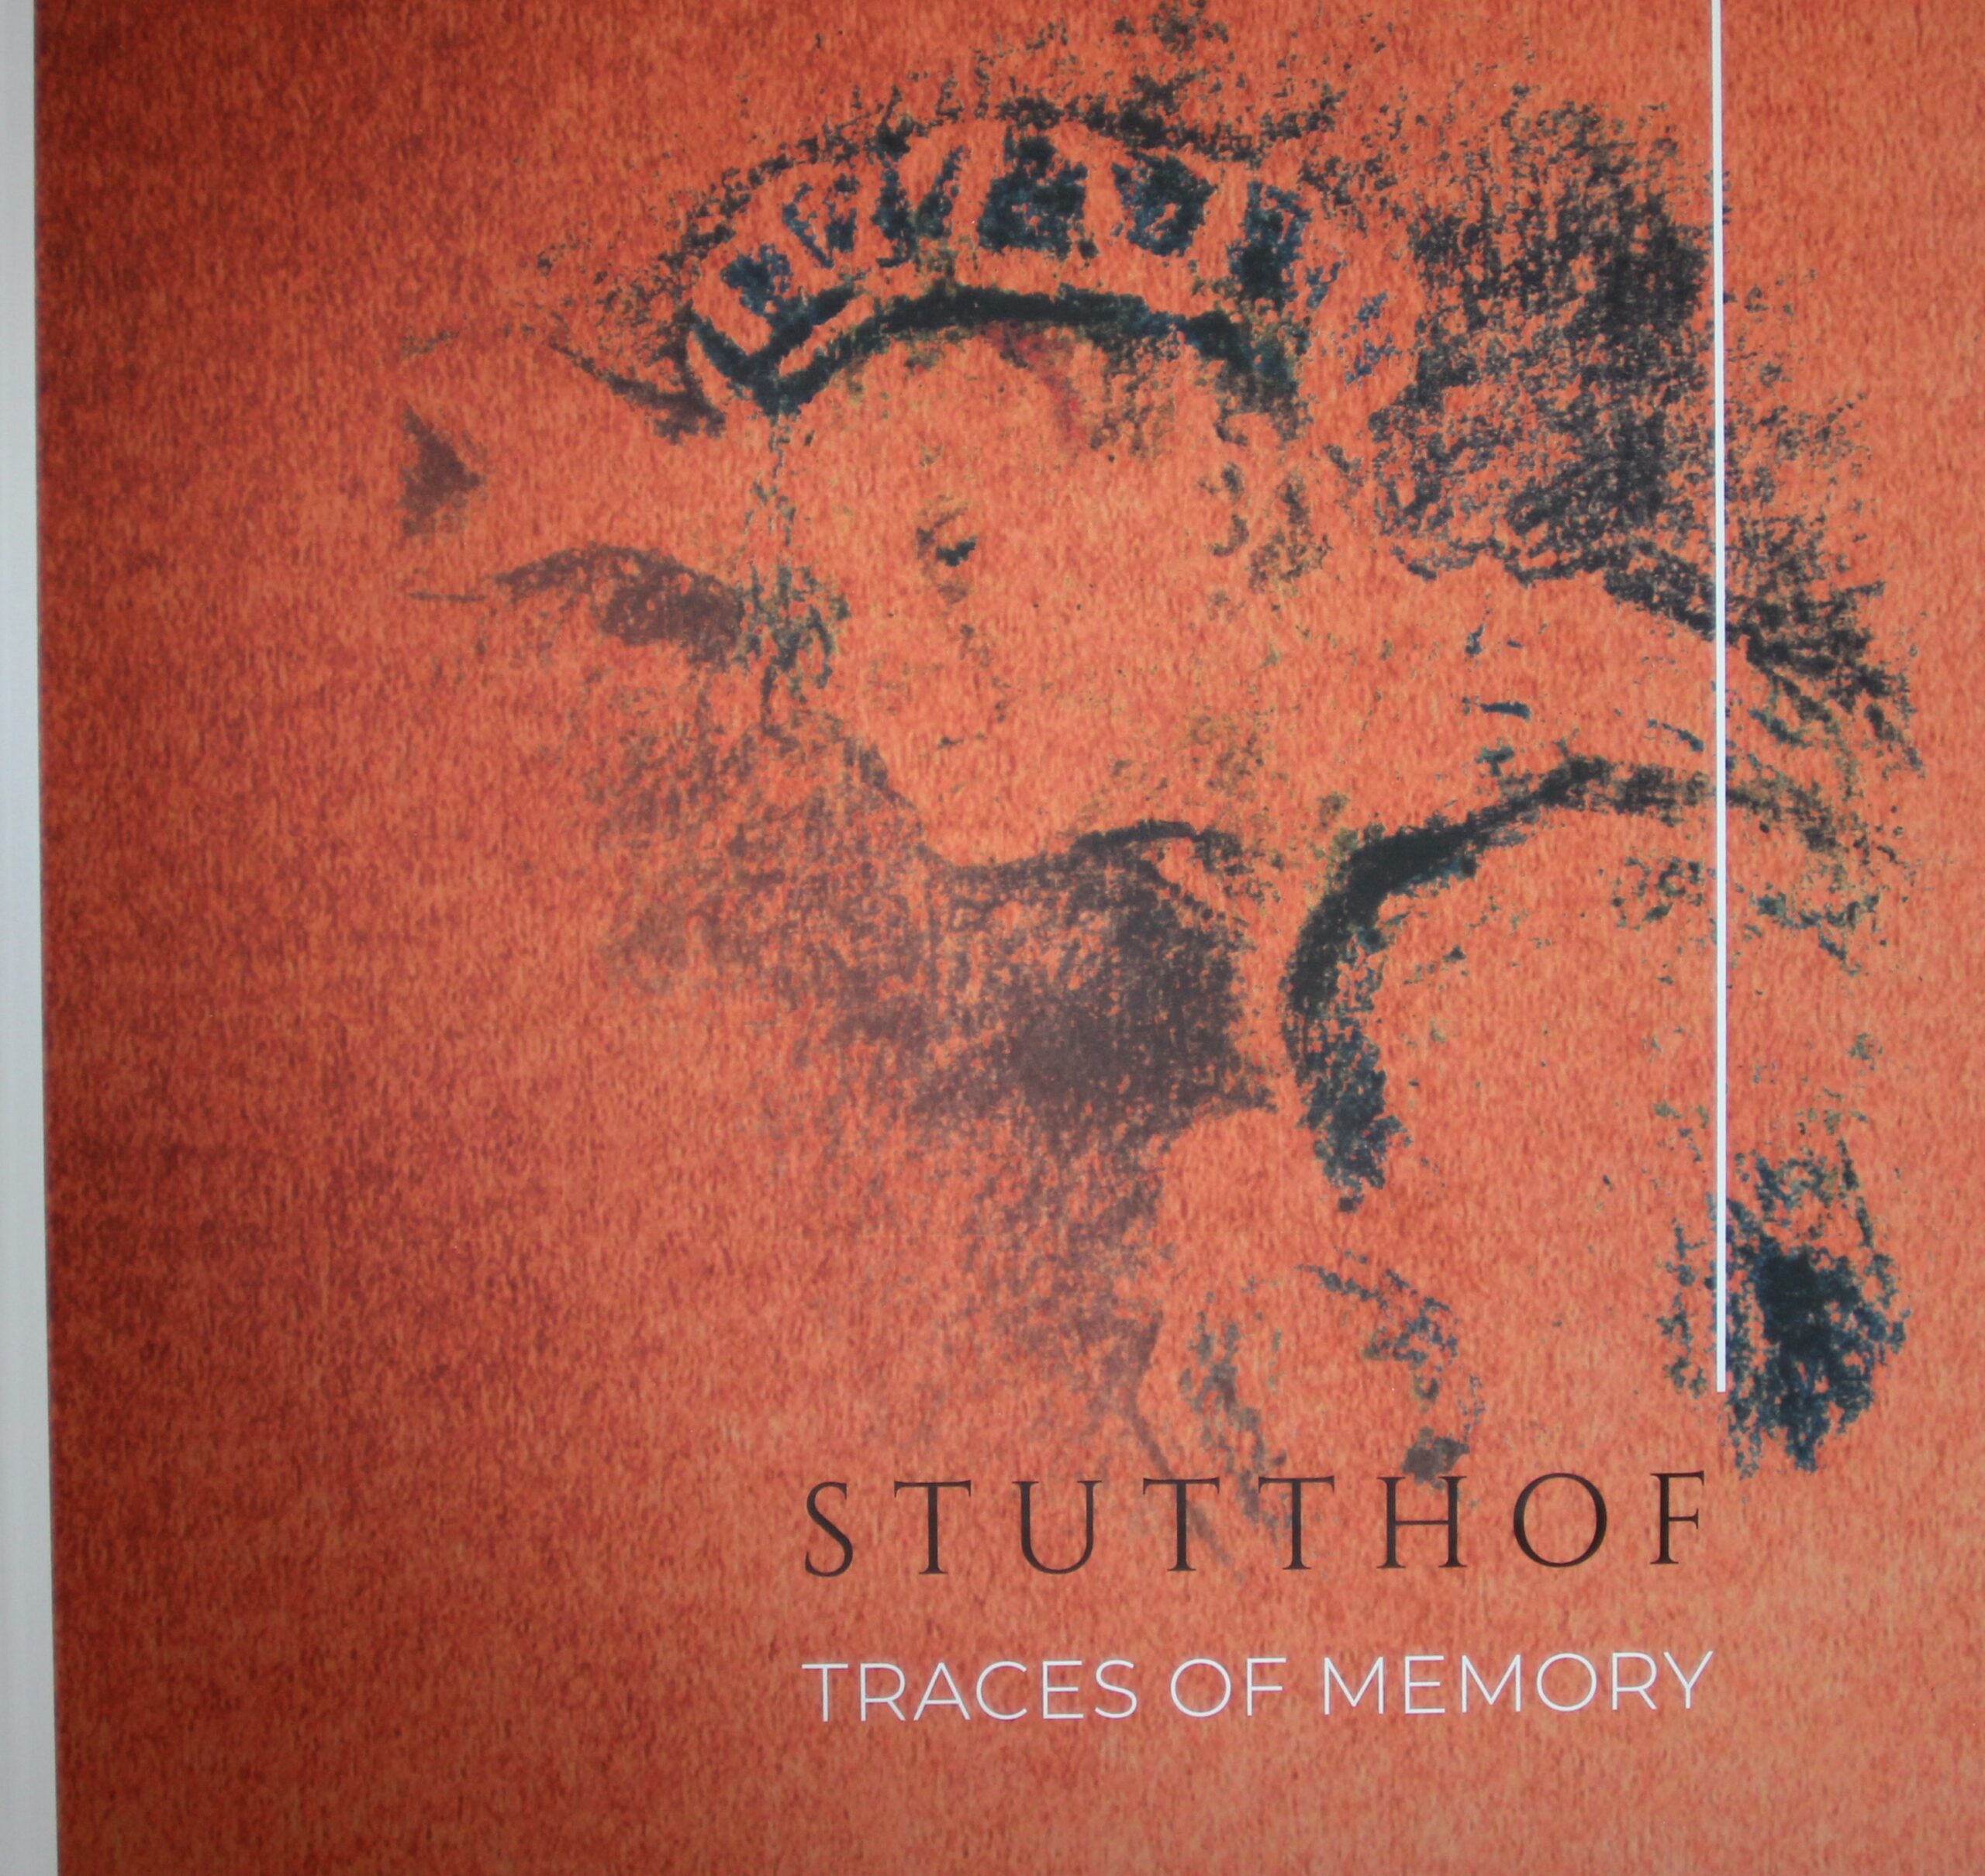 Okładka publikacji Stutthof. Traces of memory